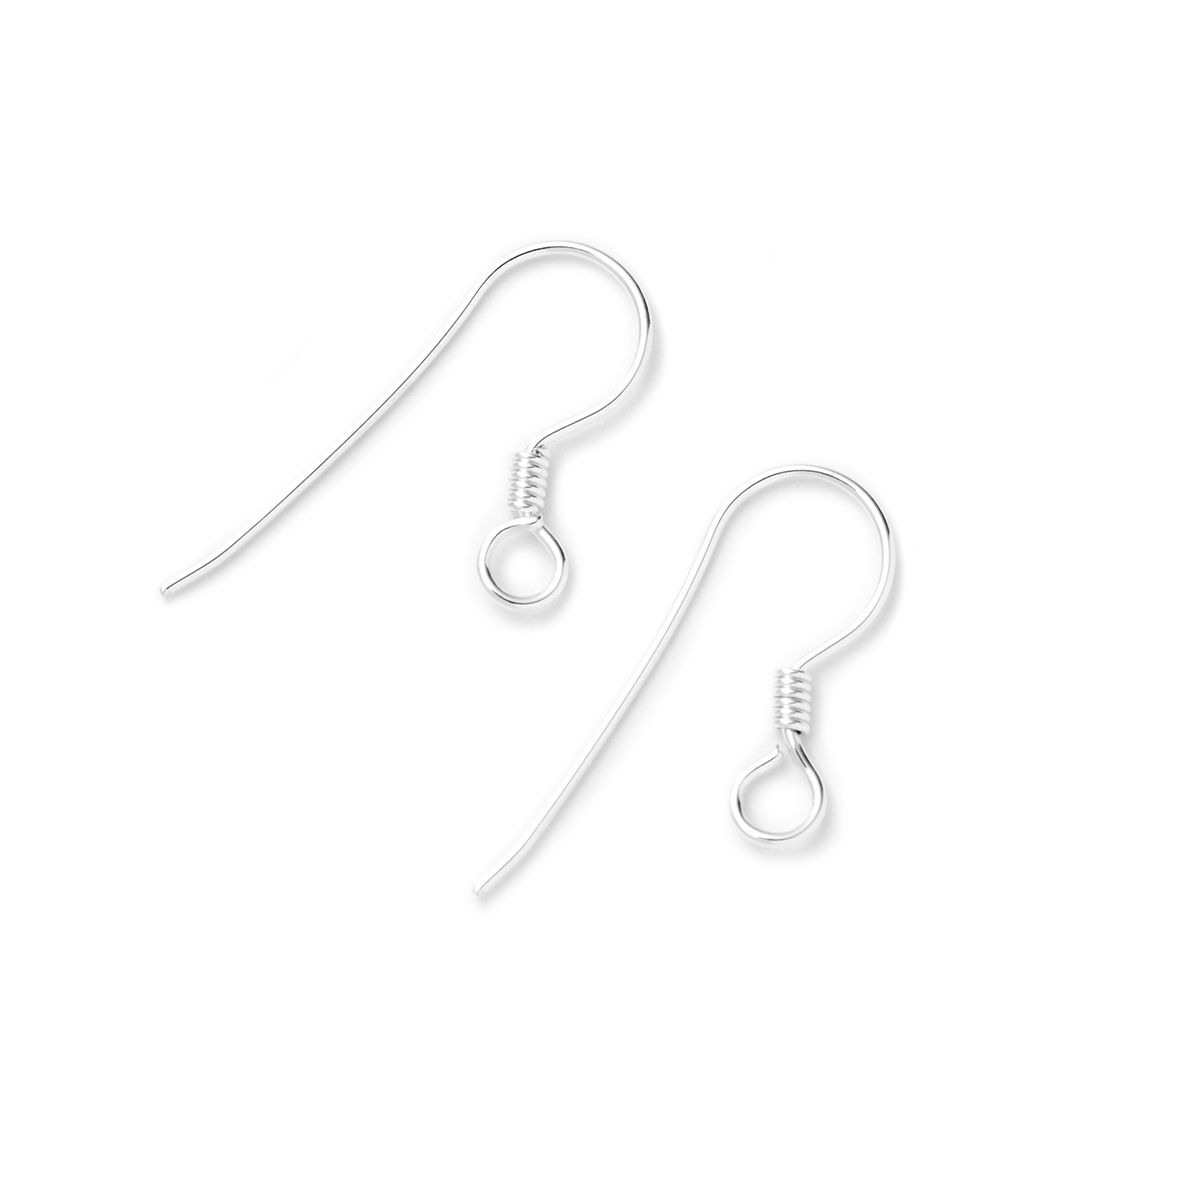 Shephard hook earring wires - mini tutorial 